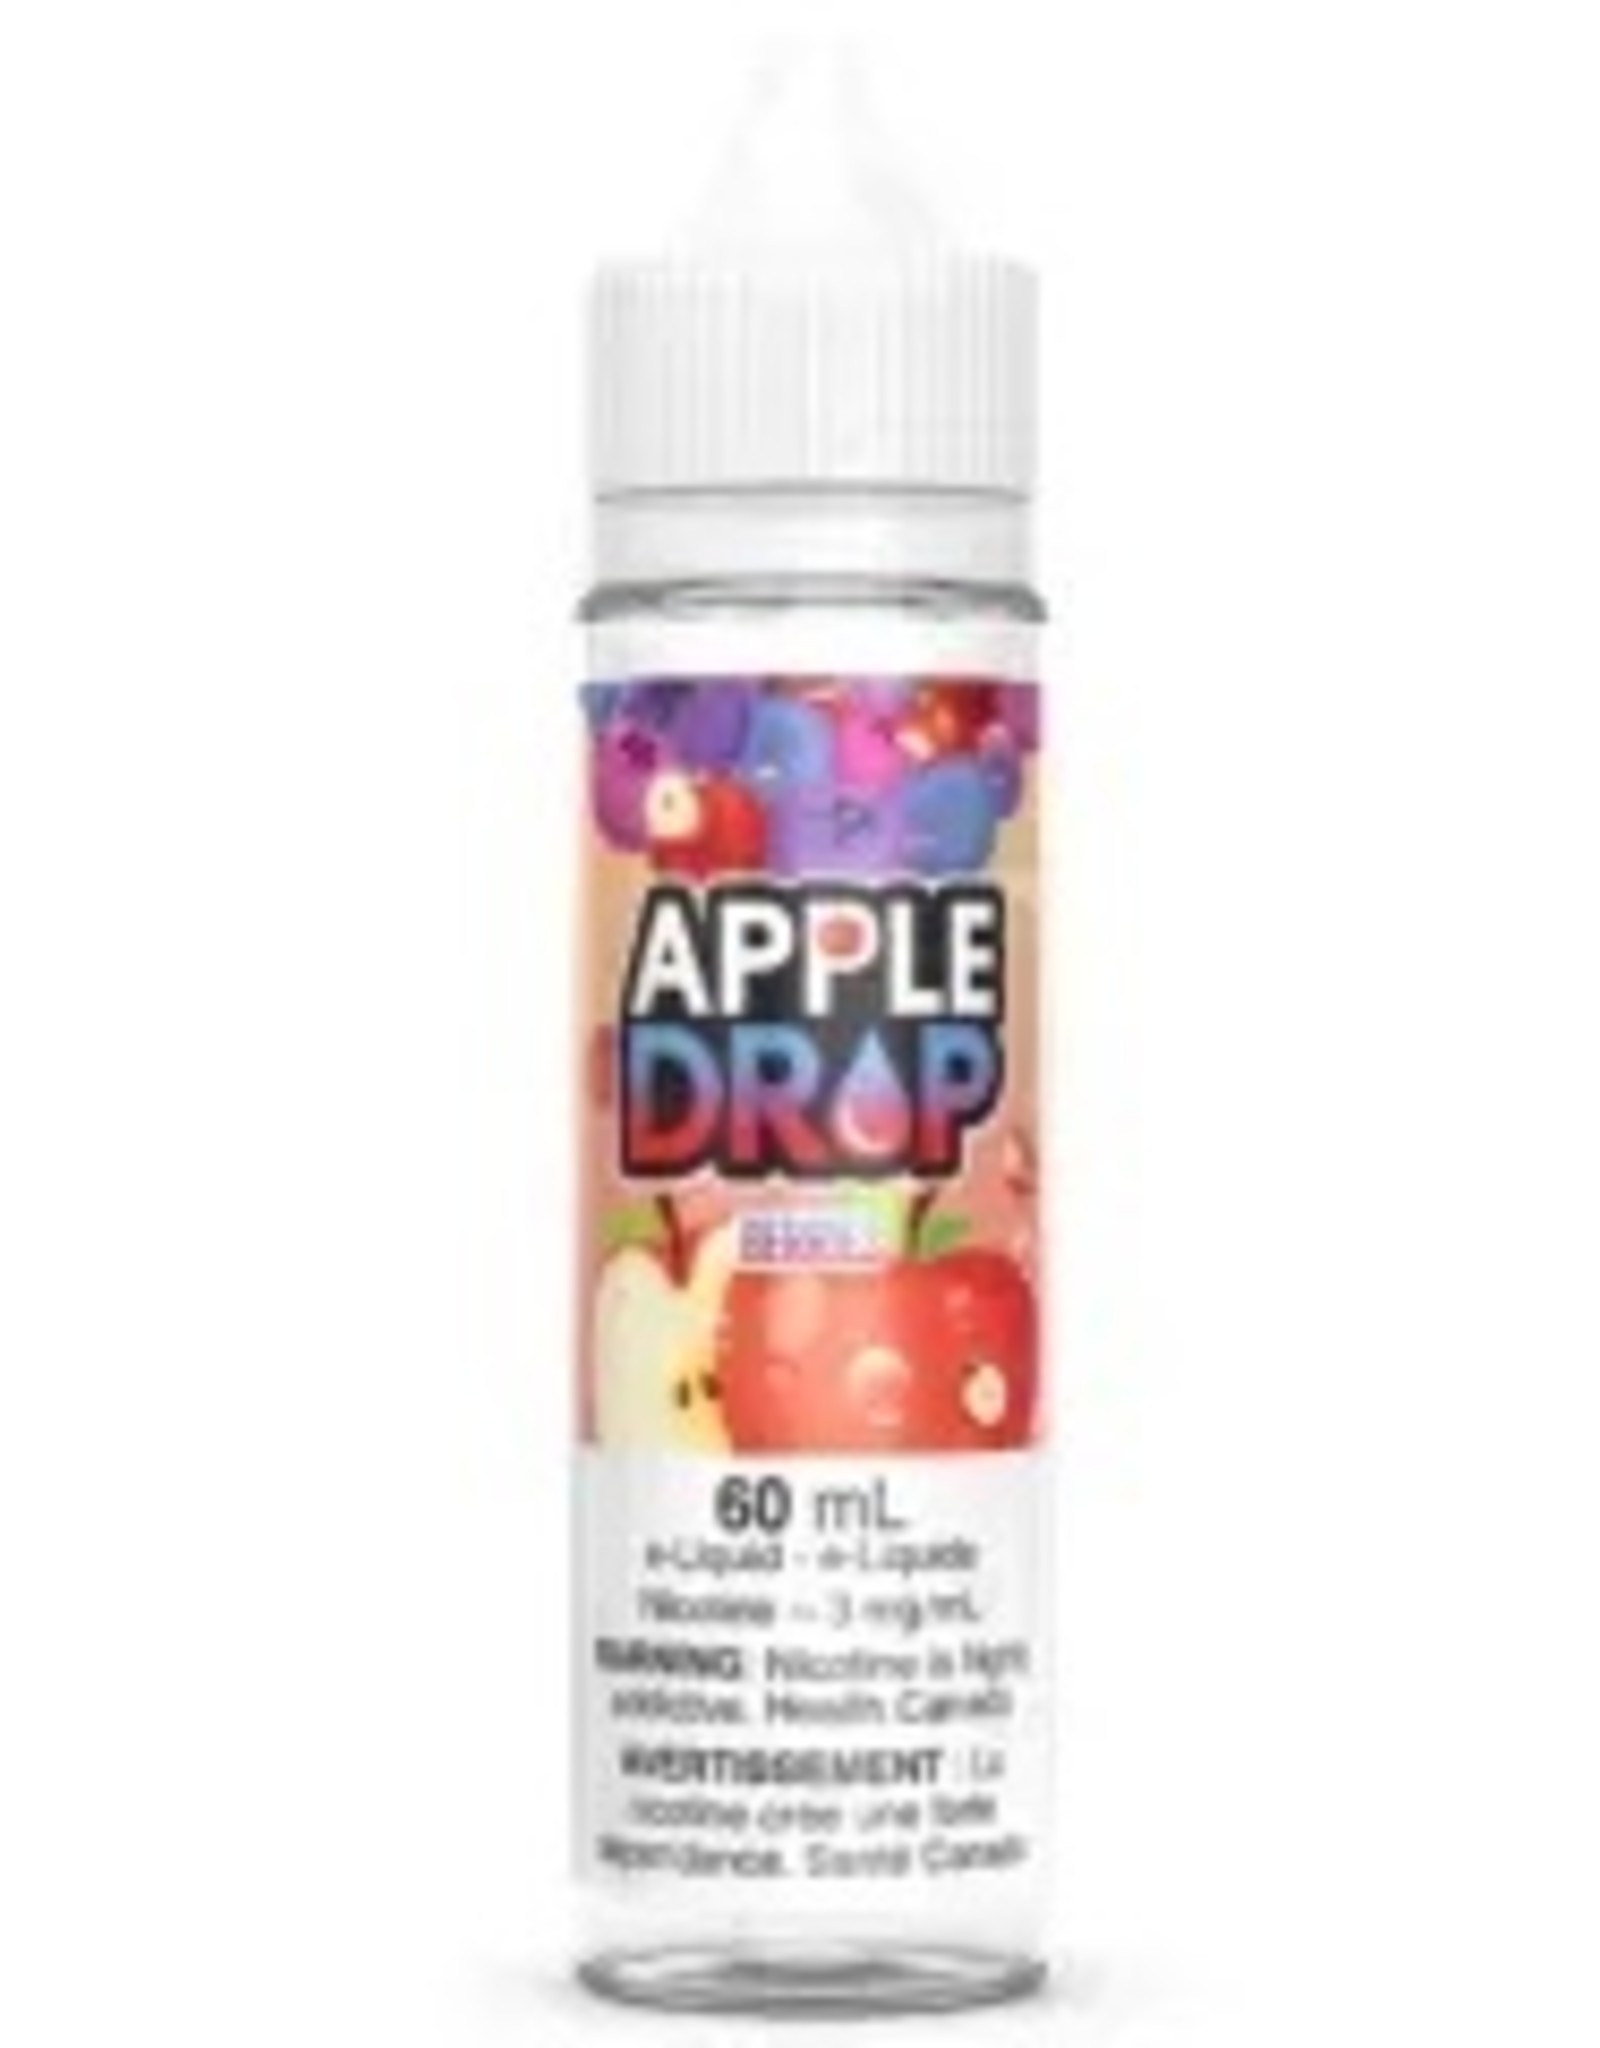 Apple Drop EXCISE 60ml Apple Drop - Apple Berries